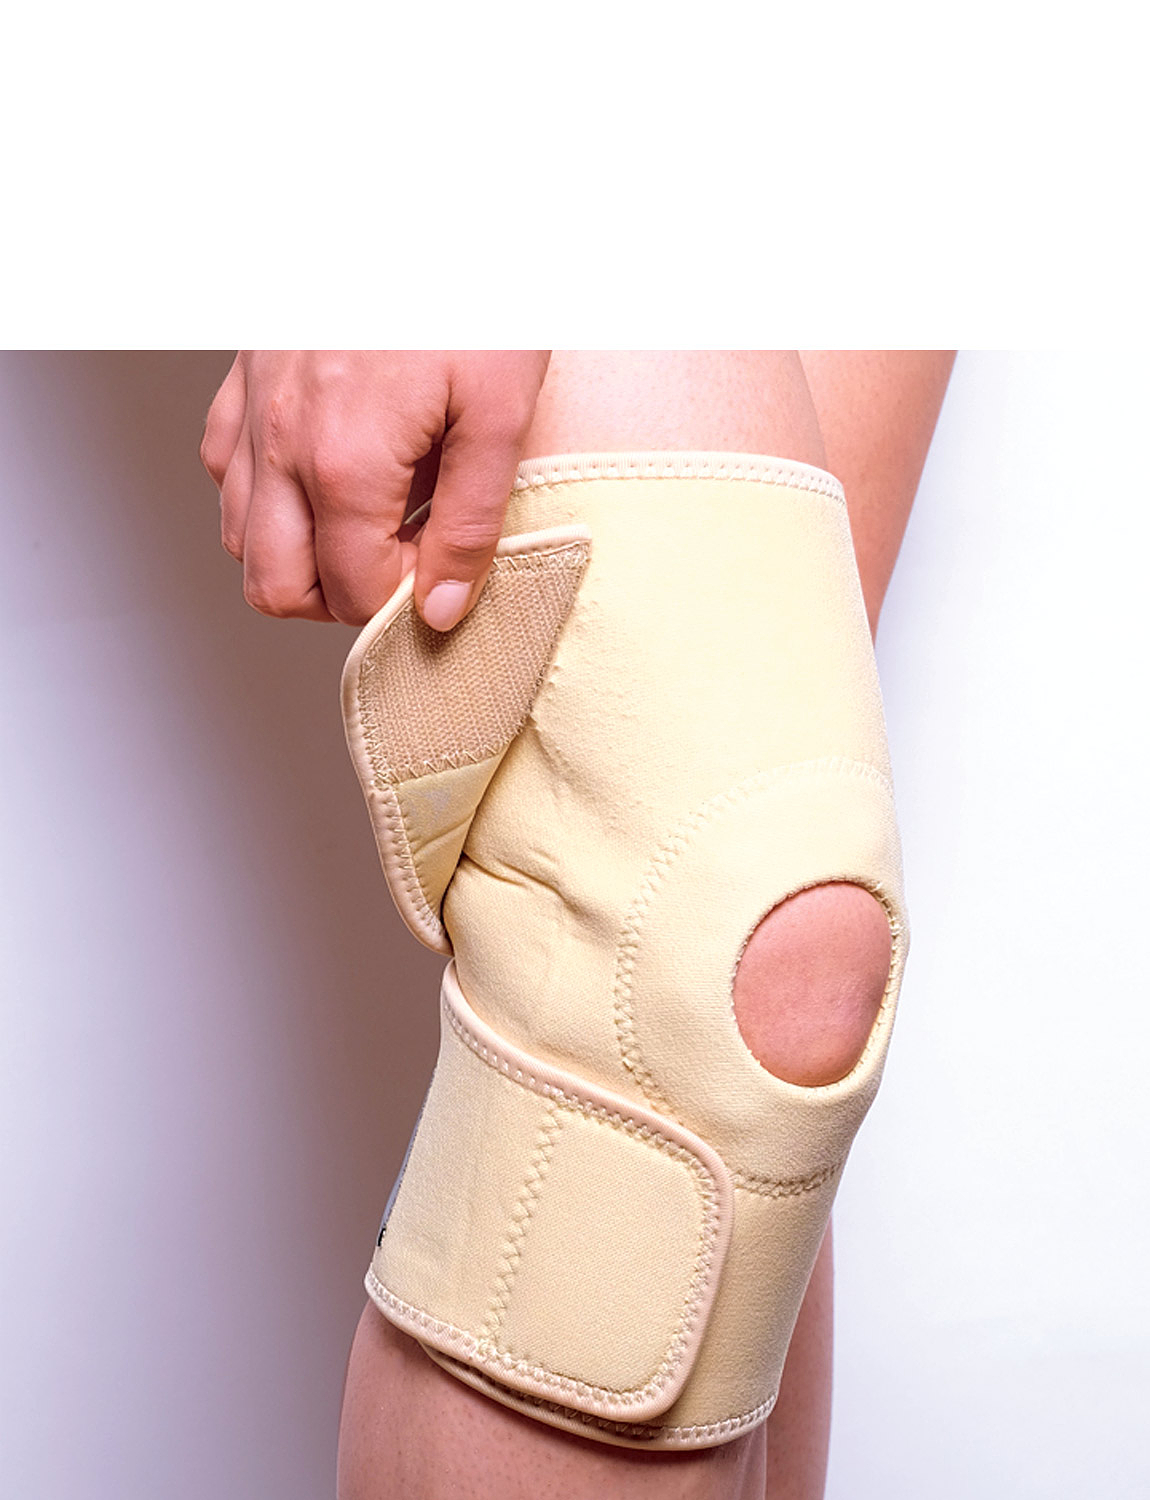 Hinged Knee Support - PRO #190 Hinged Stabilizing Knee Brace